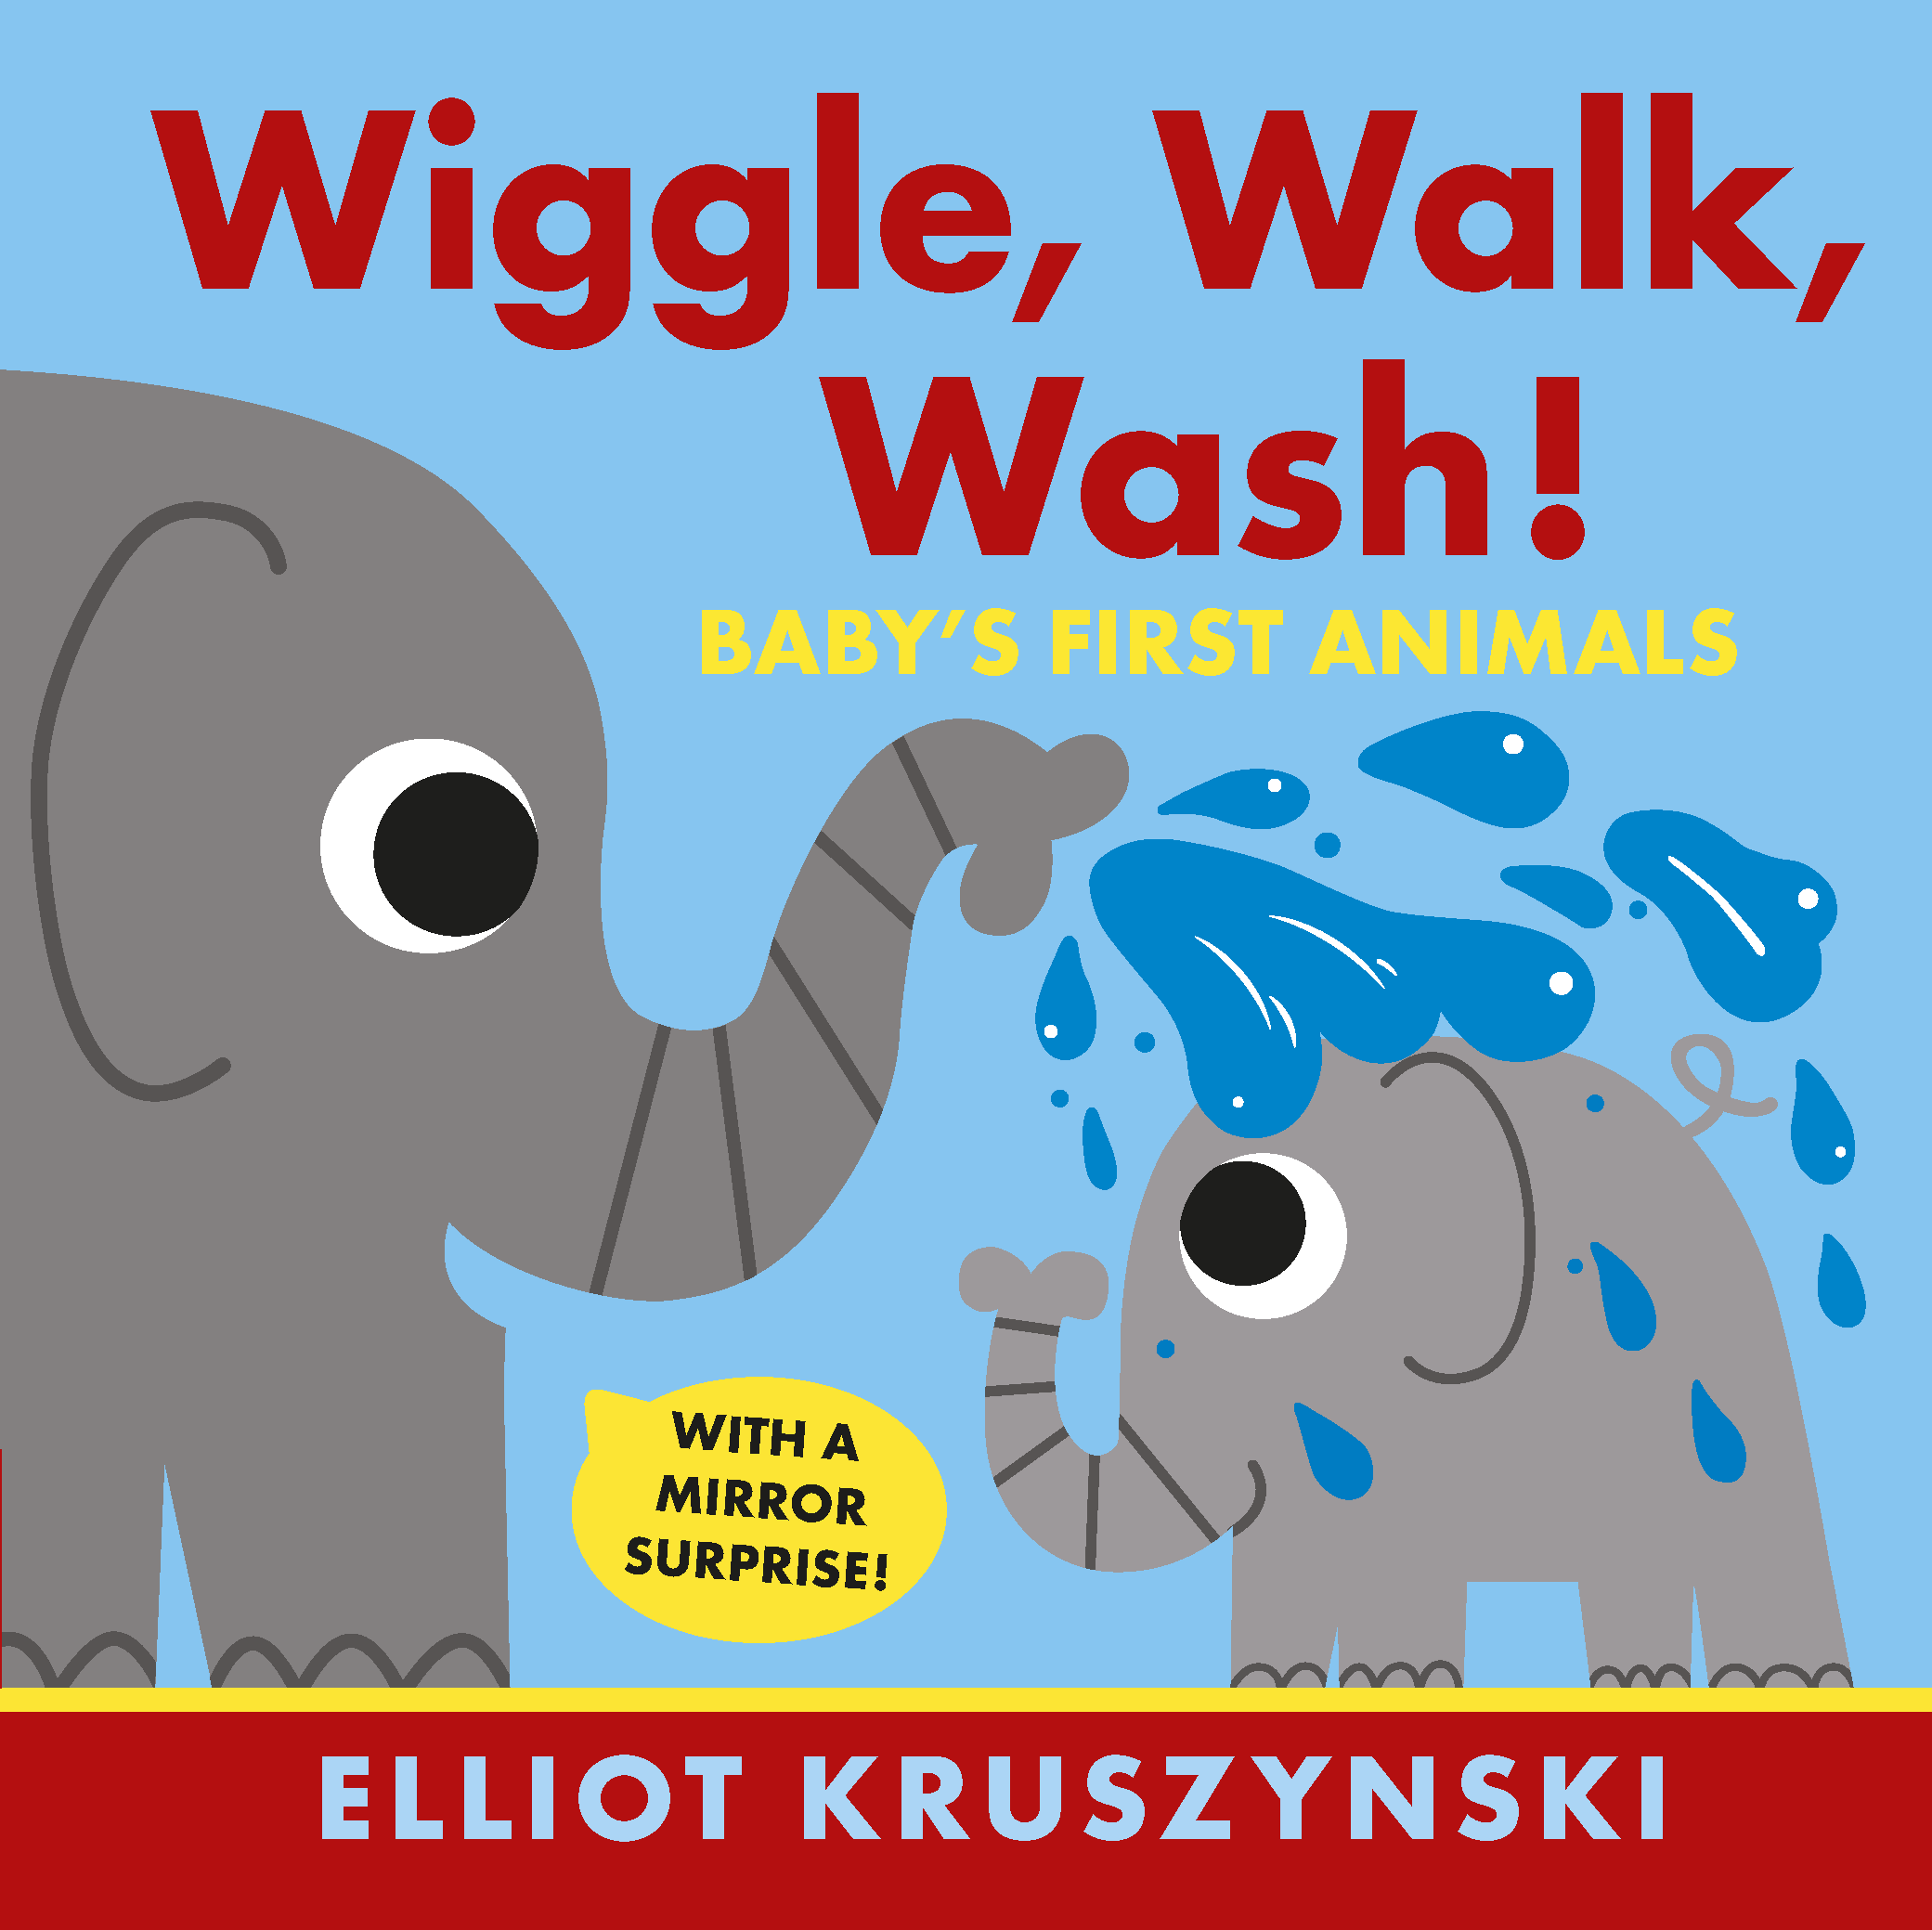 Wiggle-Walk-Wash-Baby-s-First-Animals